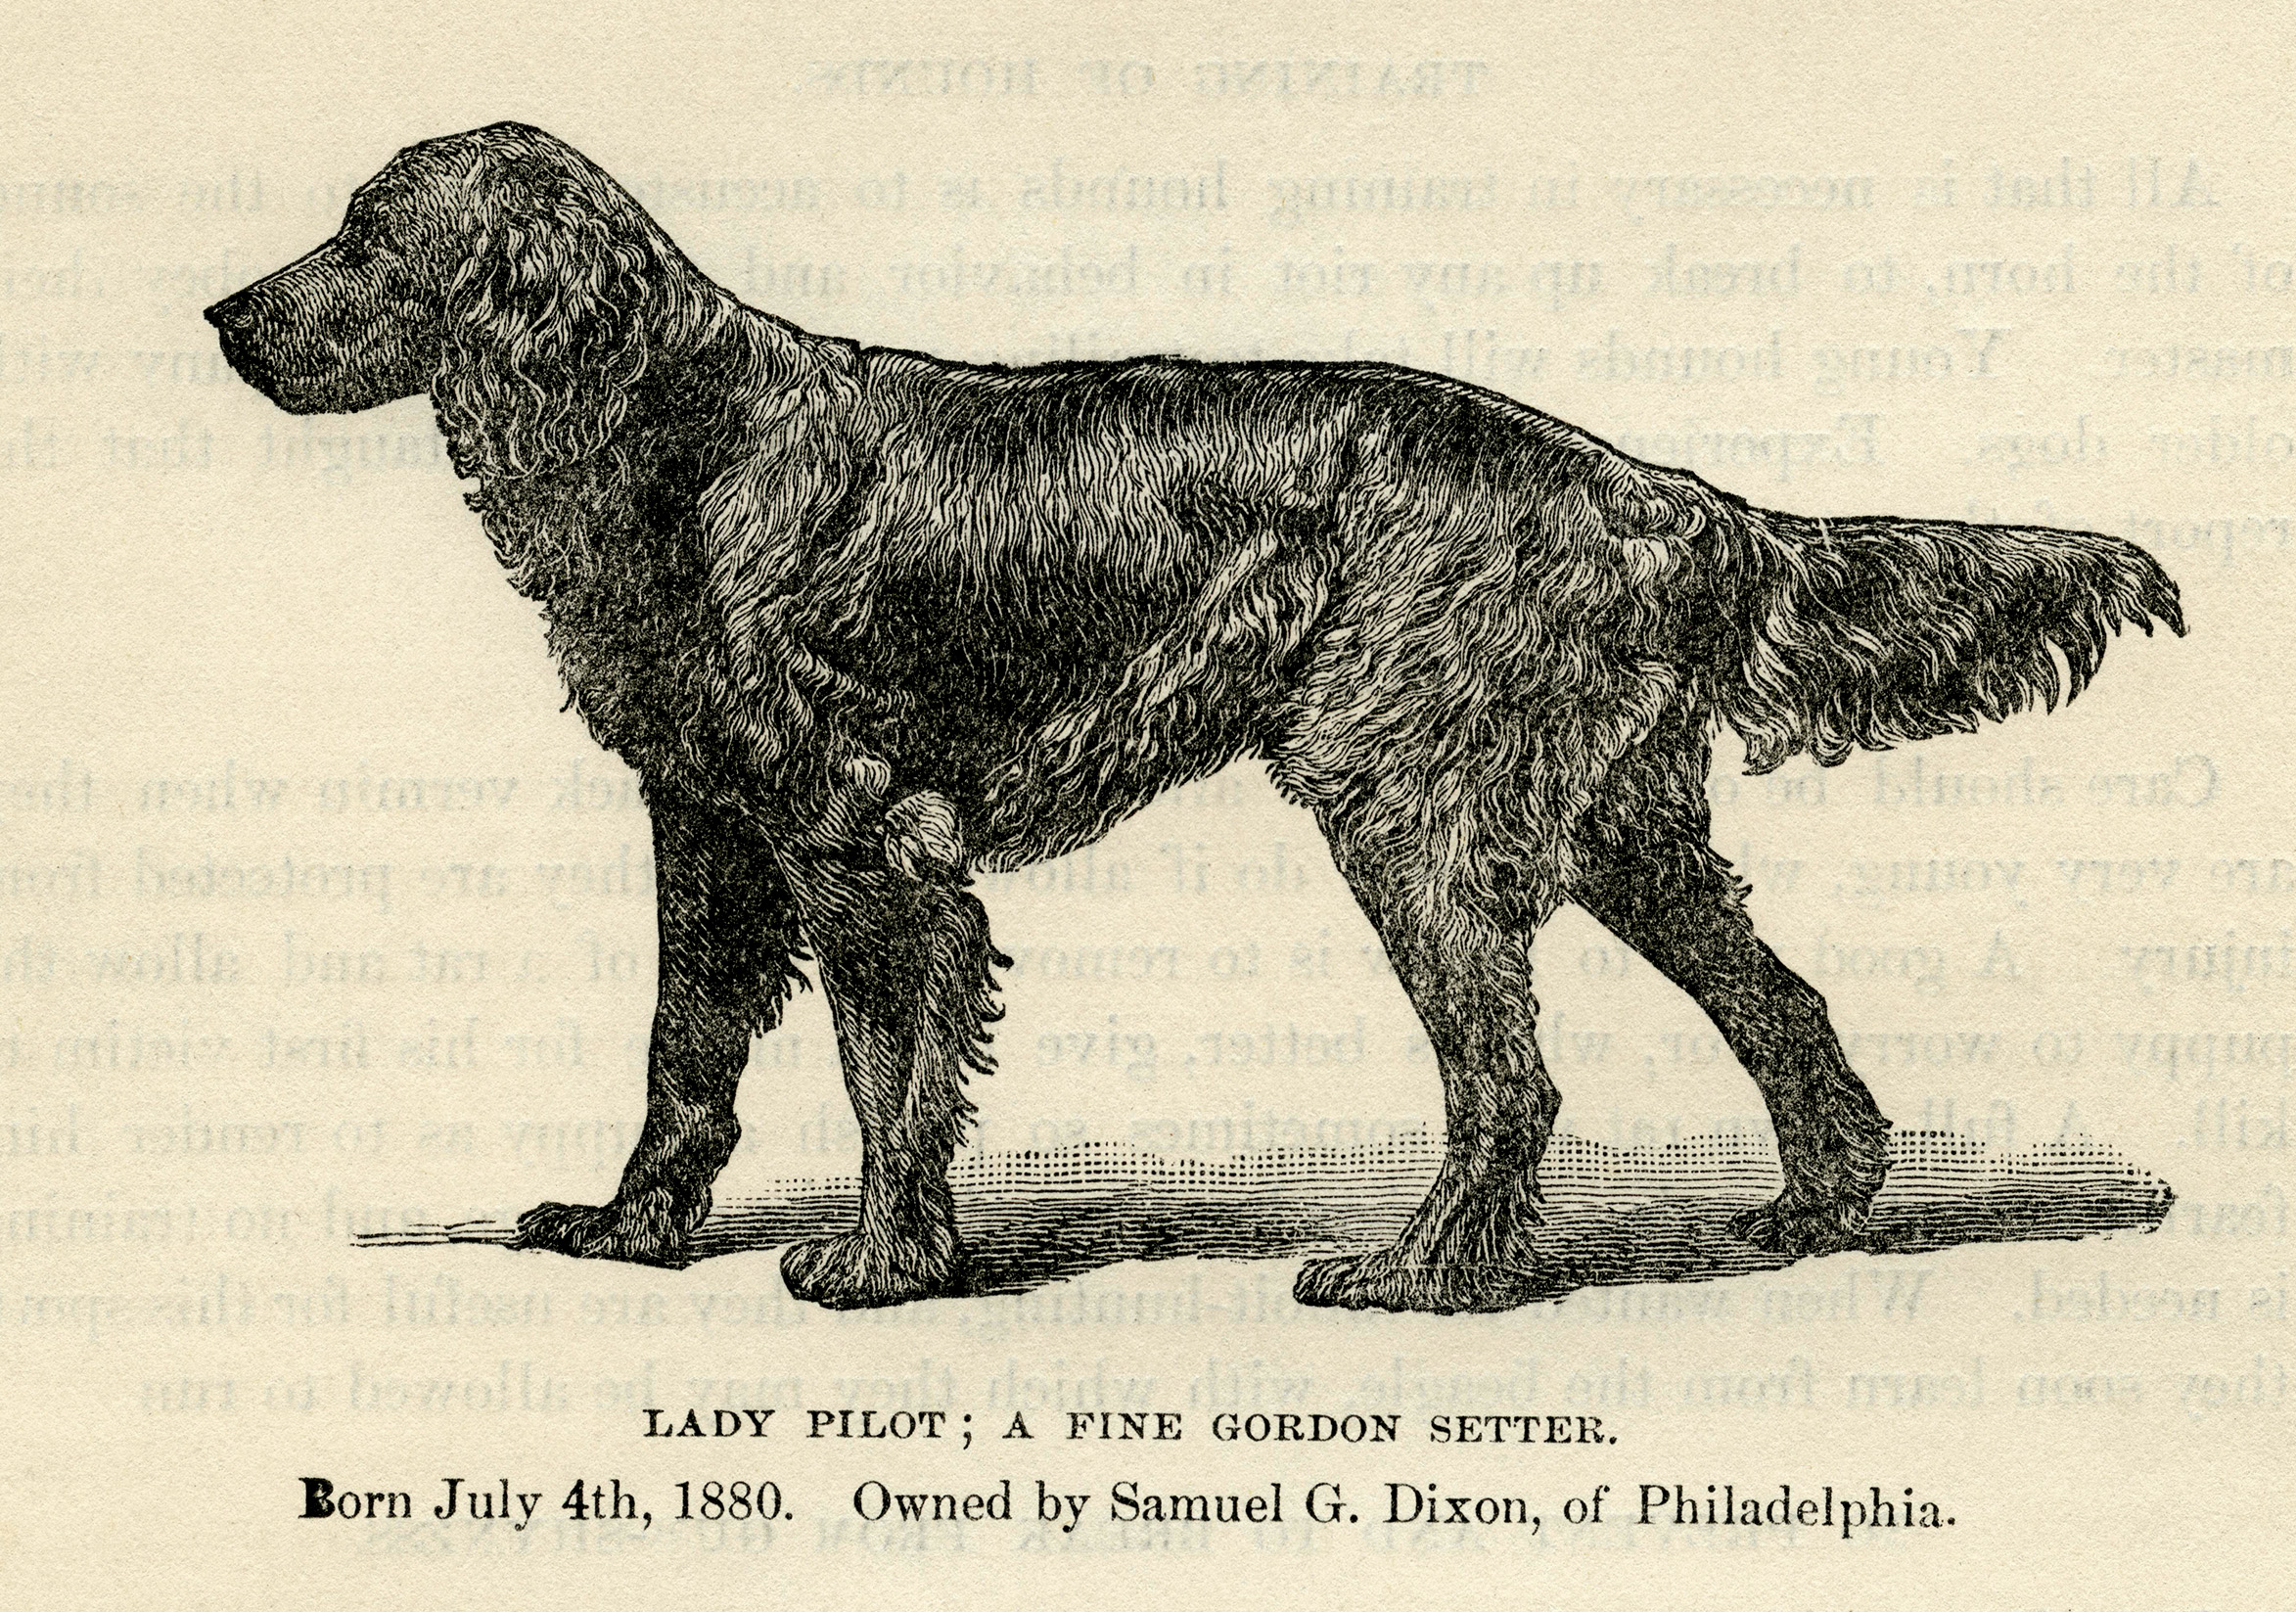 Olivier de Penne 1800s Hunting Dog Signed Lithographs Irish Setter n Gordon Setter FREE SHIPPING- PAIR of C